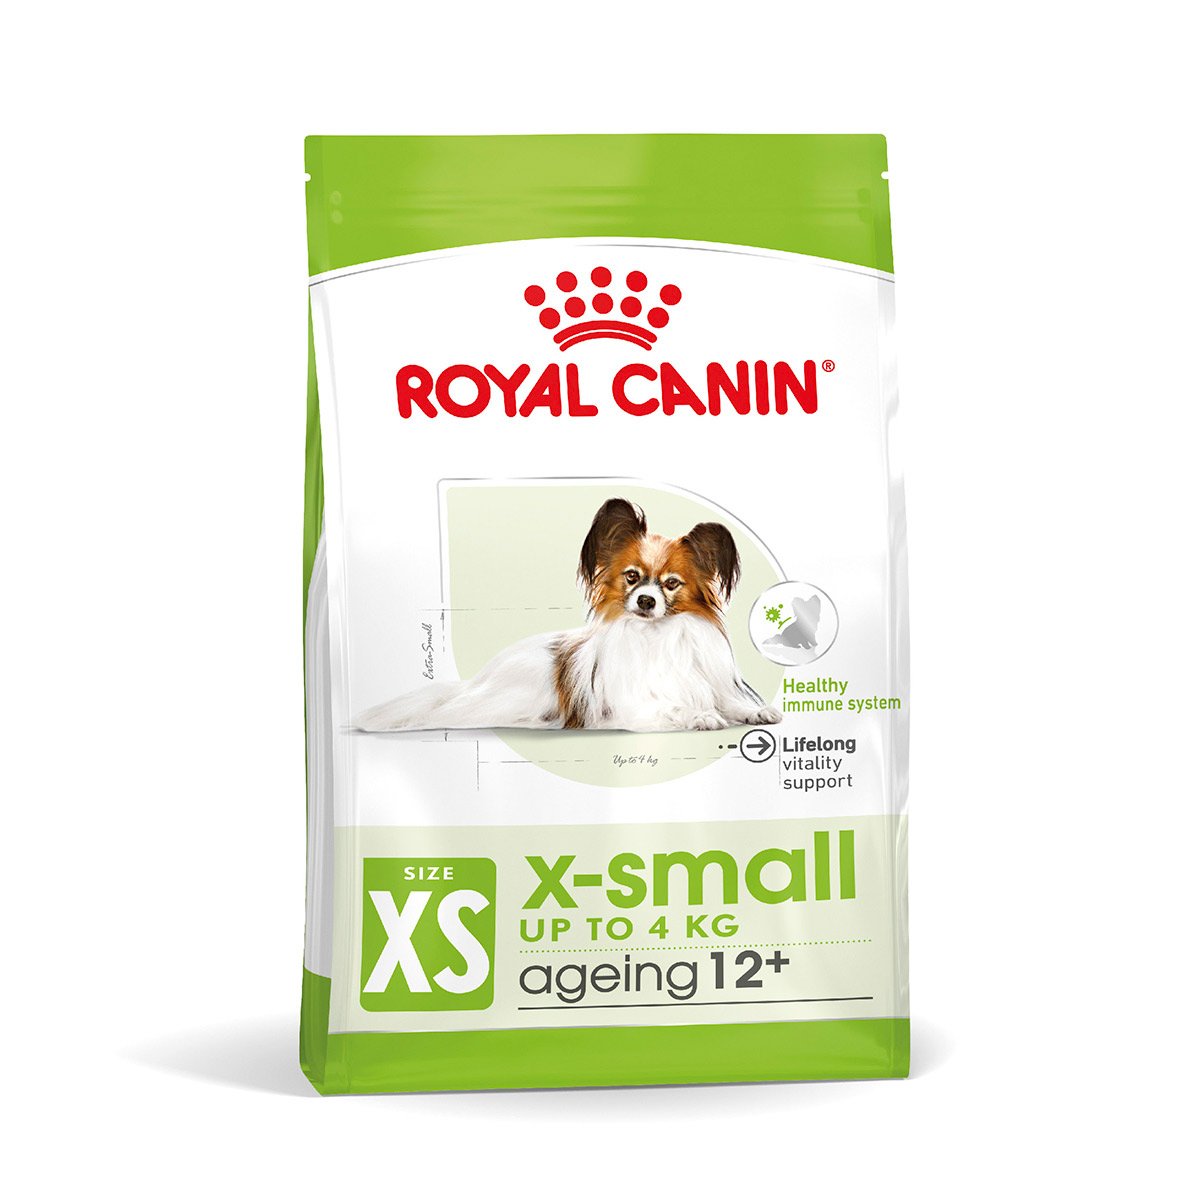 ROYAL CANIN X-SMALL Ageing 12+ Trockenfutter für ältere sehr kleine Hunde 1,5kg von Royal Canin